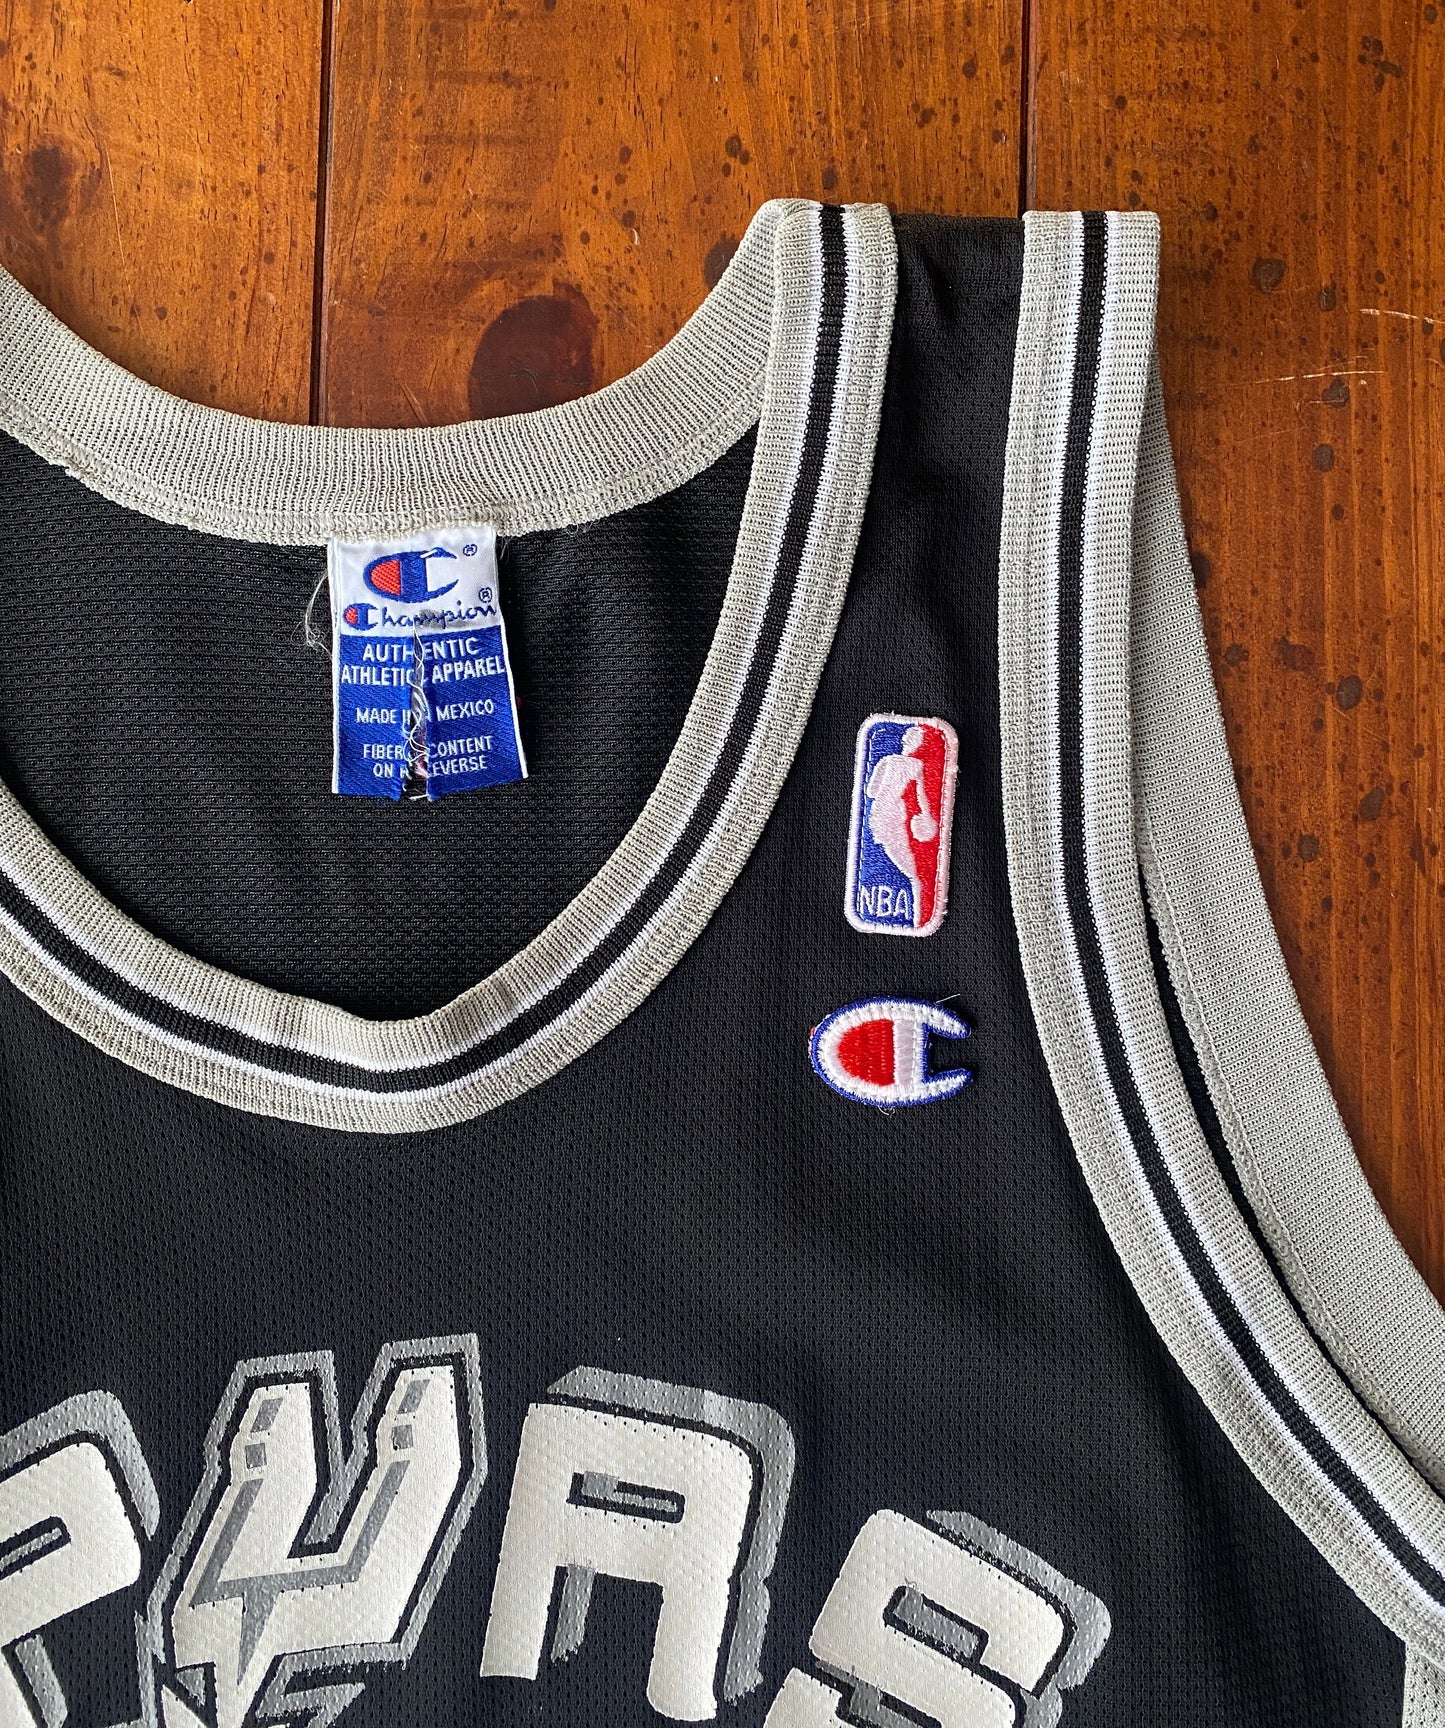 Vintage 90s David Robinson Jersey | San Antonio Spurs Champion Jersey